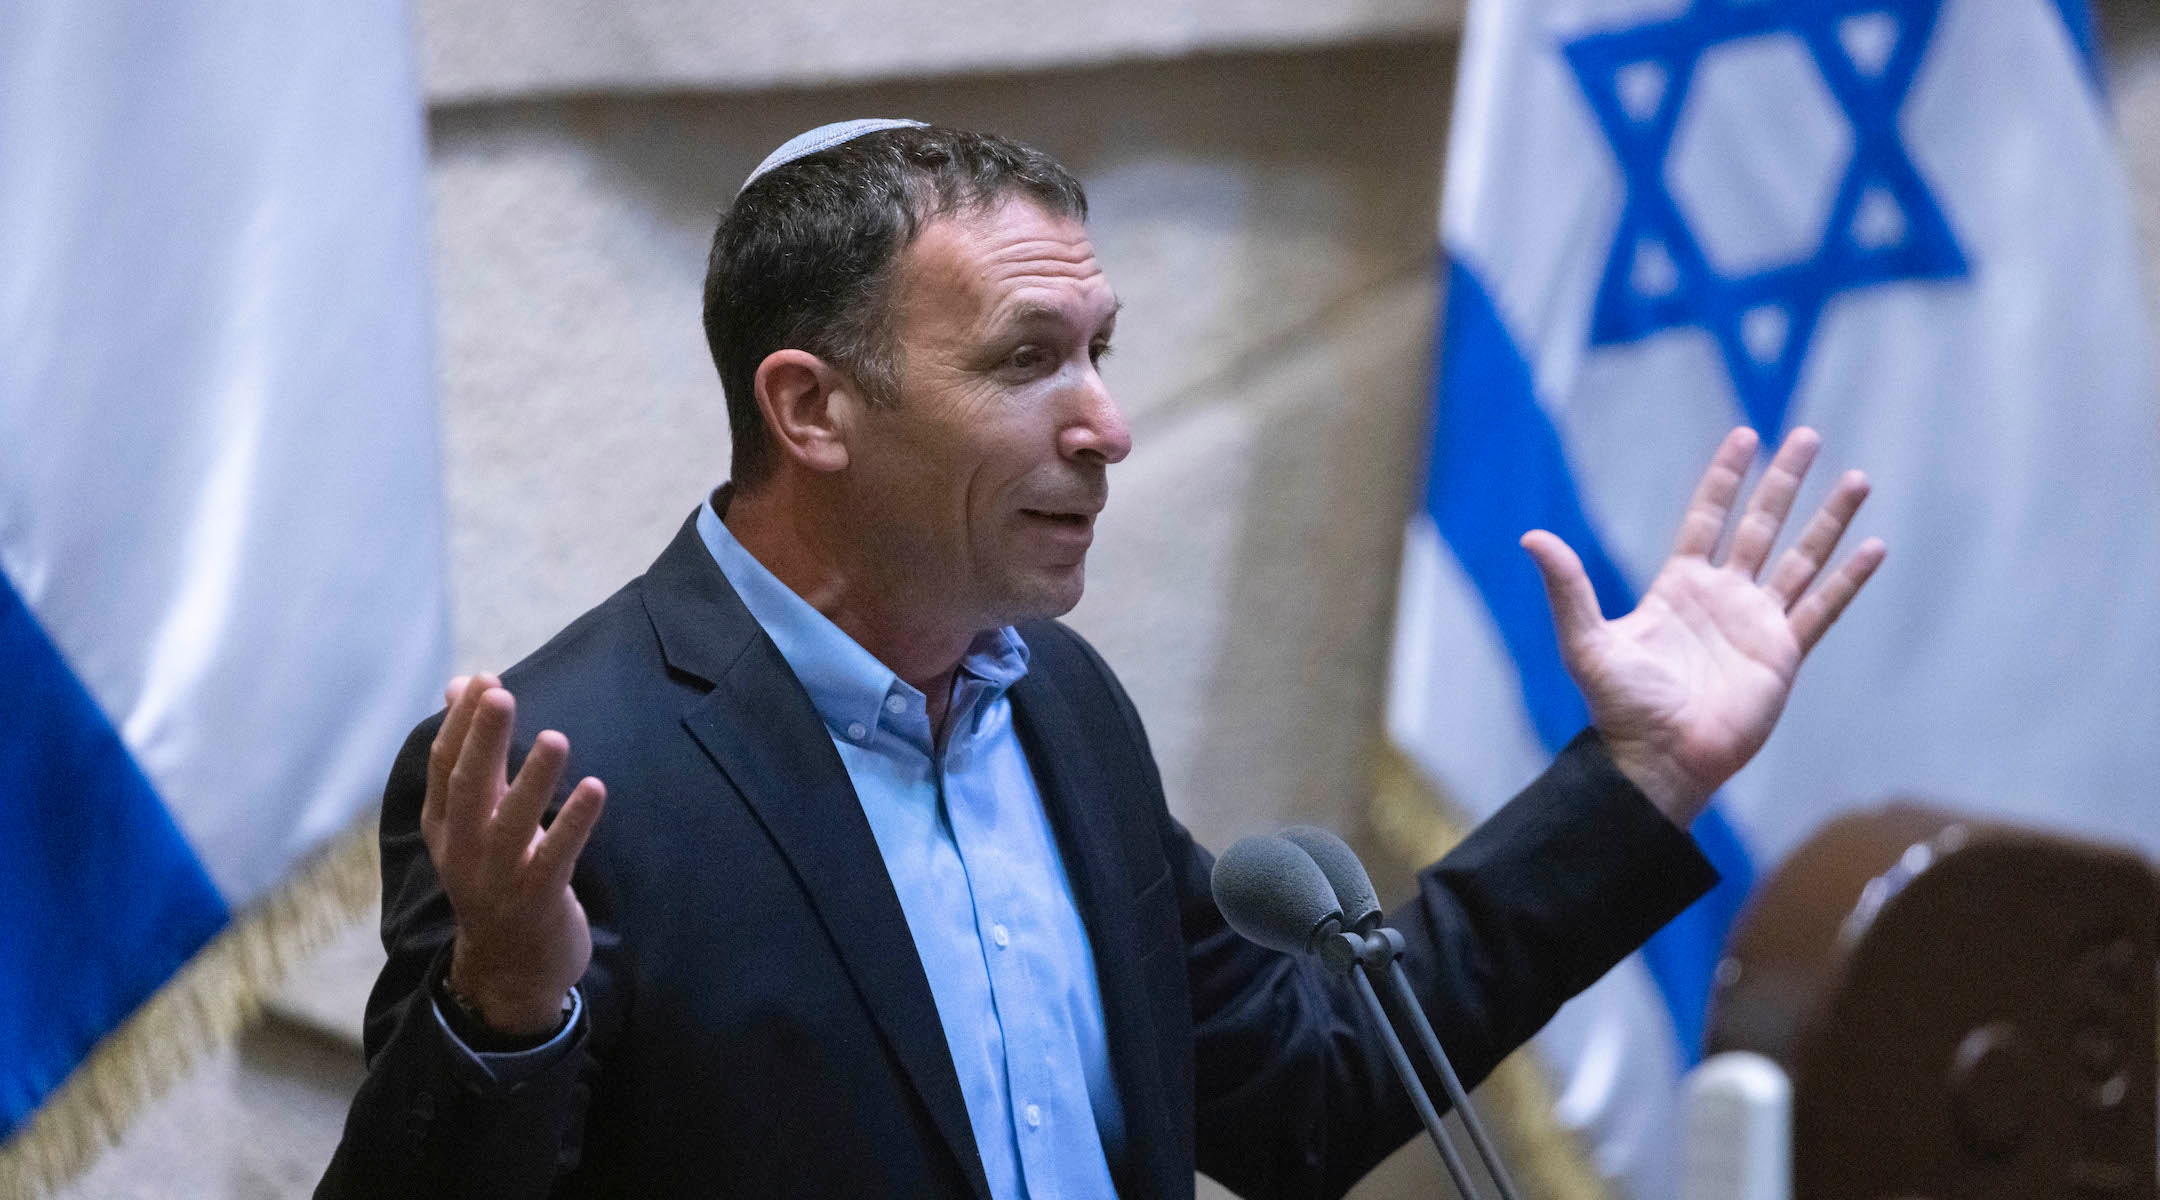 Matan Kahana, Israeli minister of religious affairs